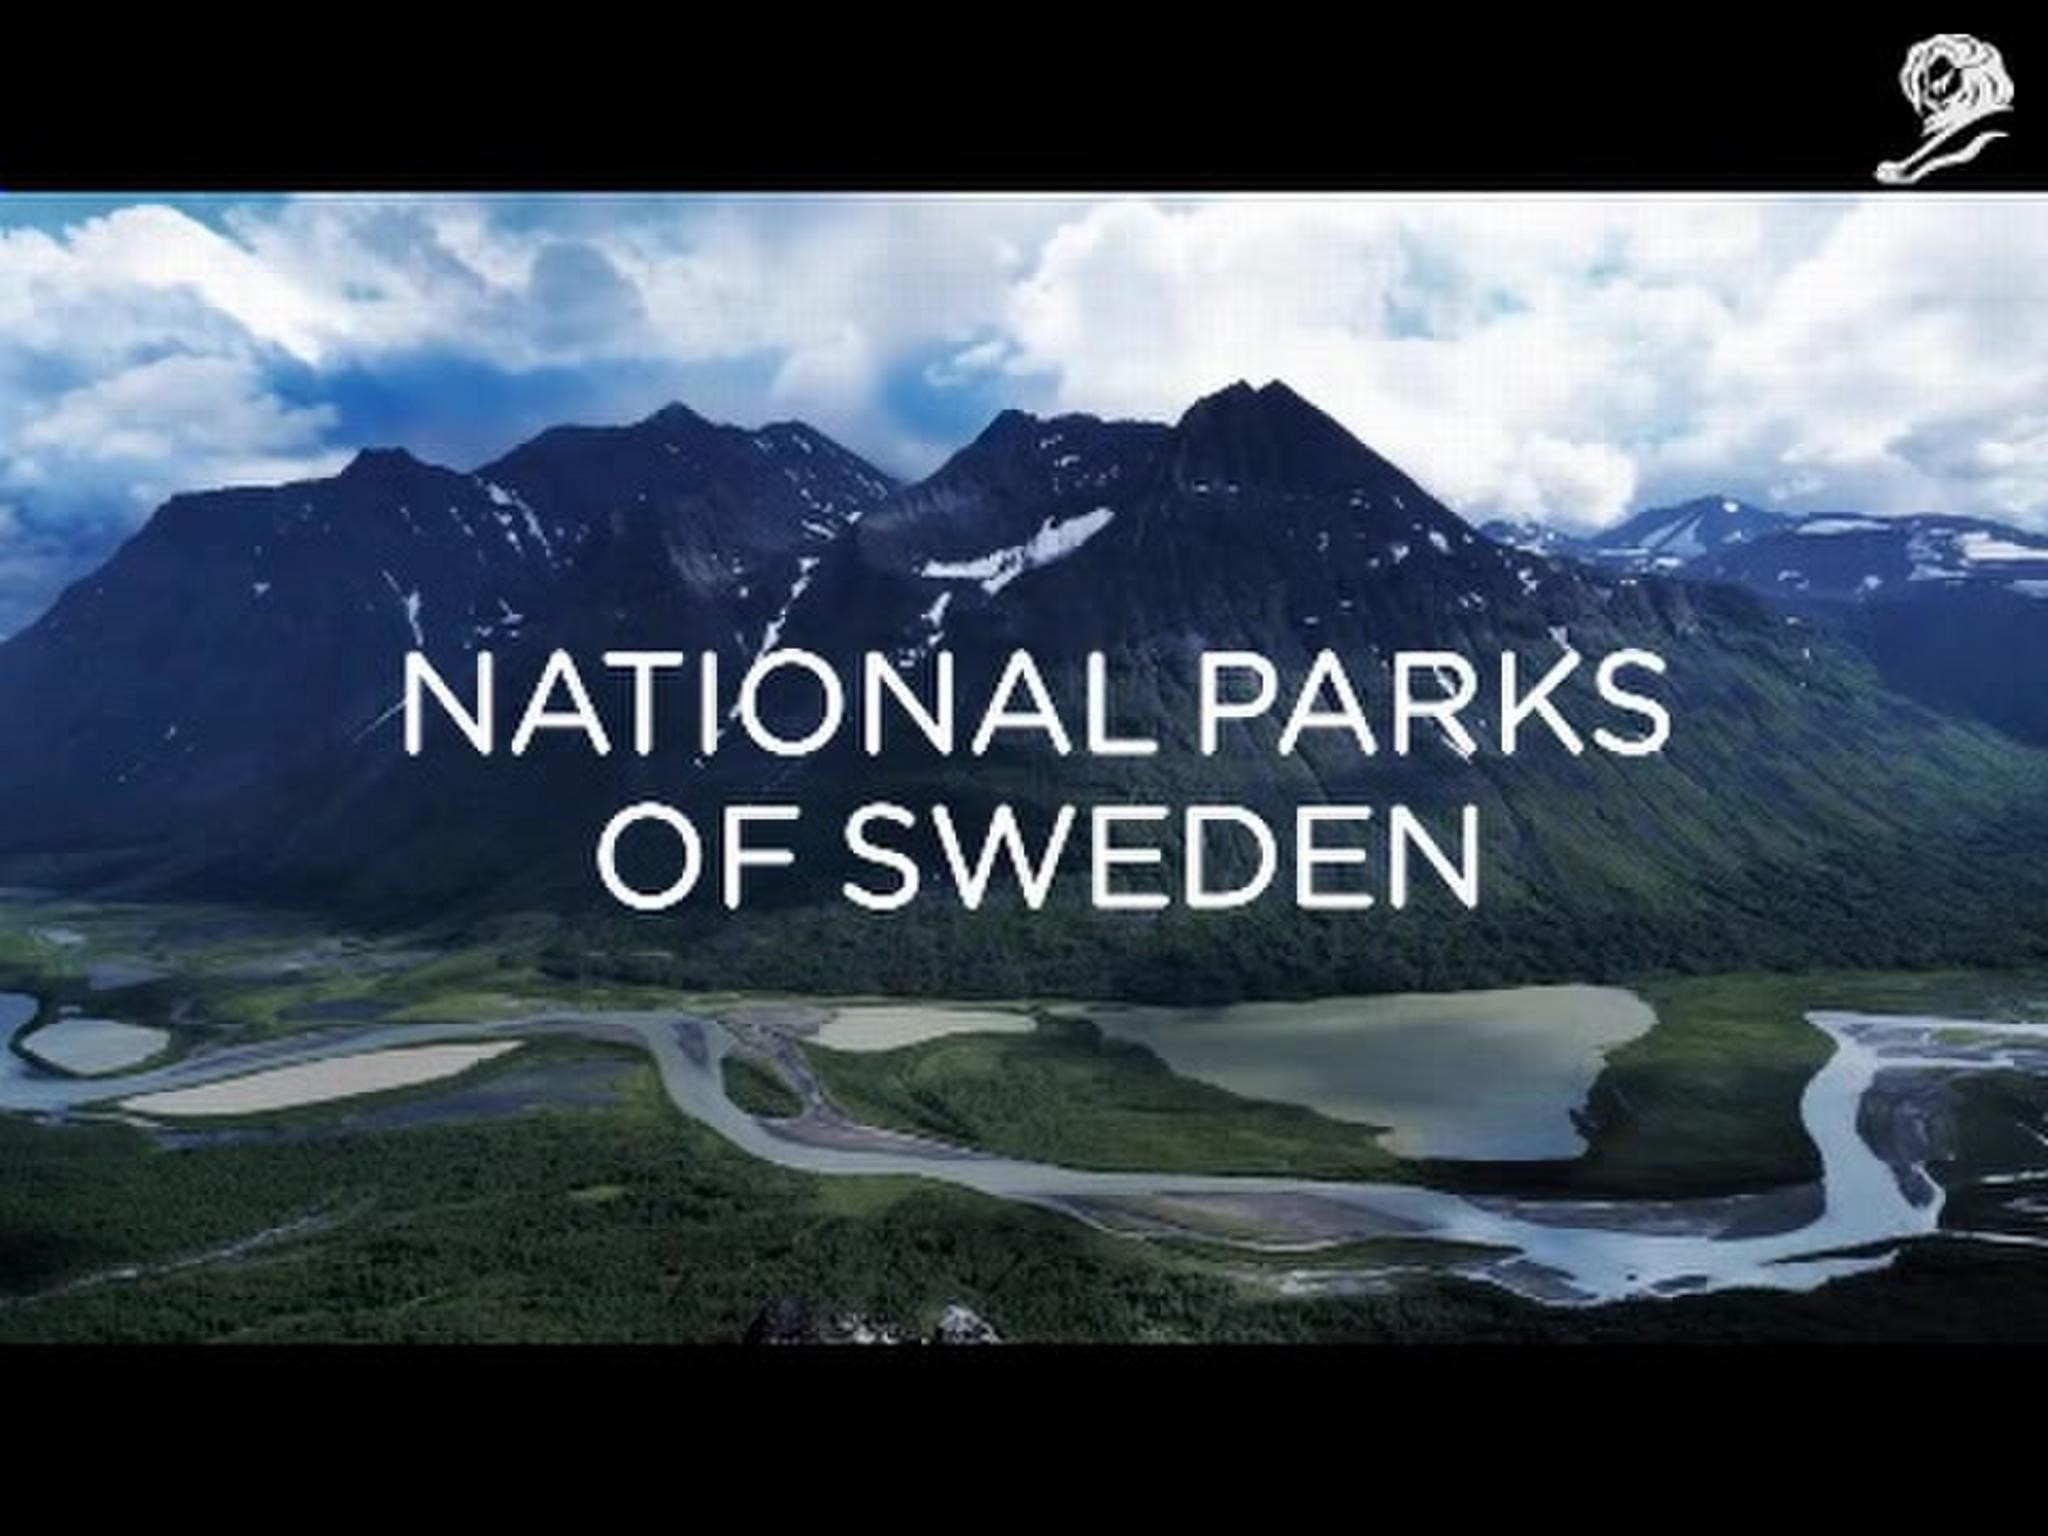 SWEDISH NATIONAL PARKS